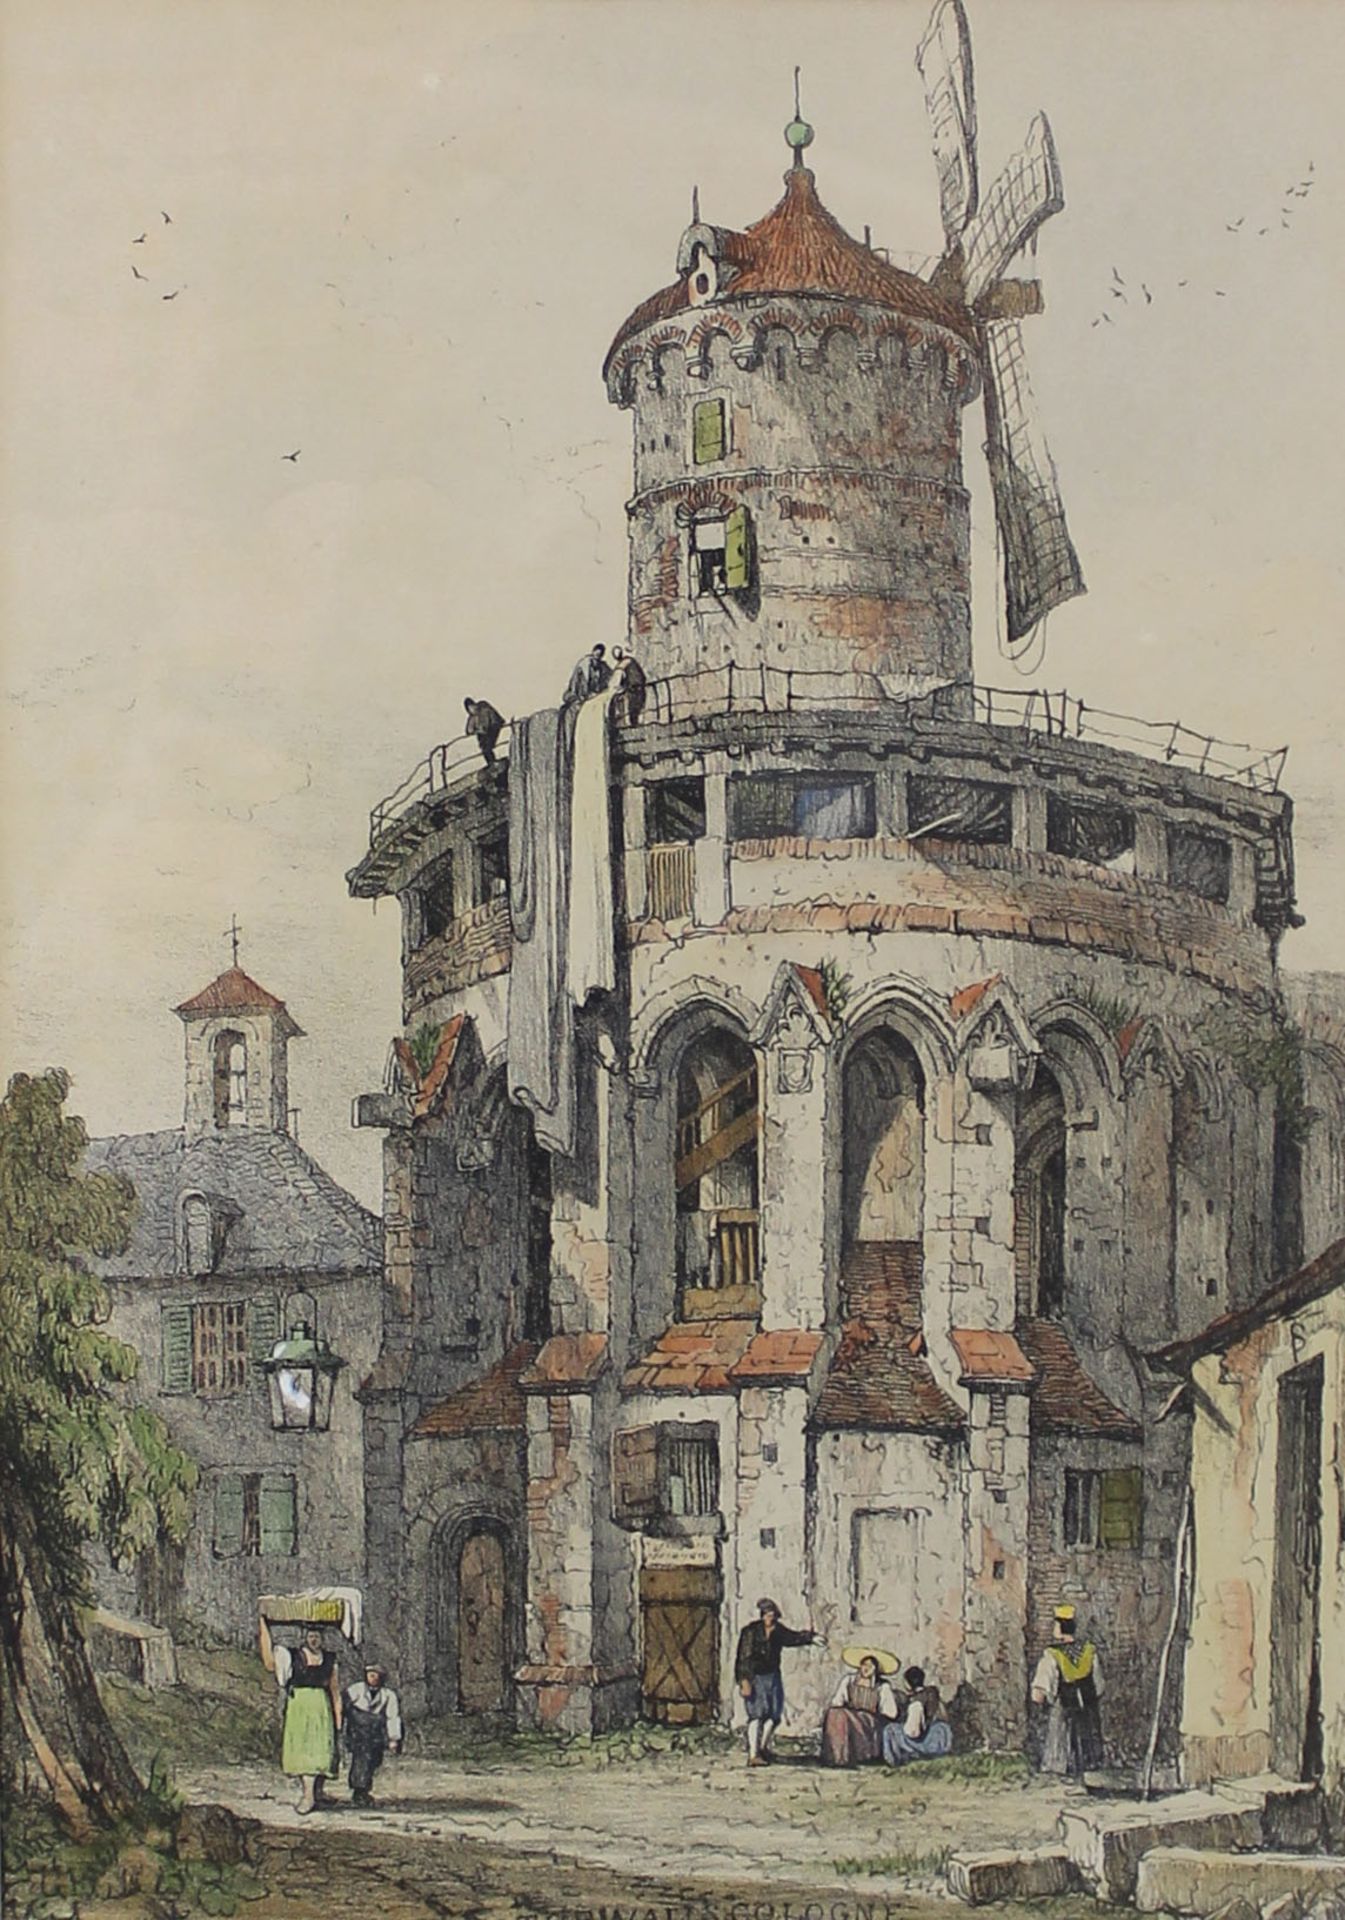 Samuel PROUT (1783 - 1852). "On the Walls, Cologne".37 cm x 26 cm the cut out. Color Lithograph,